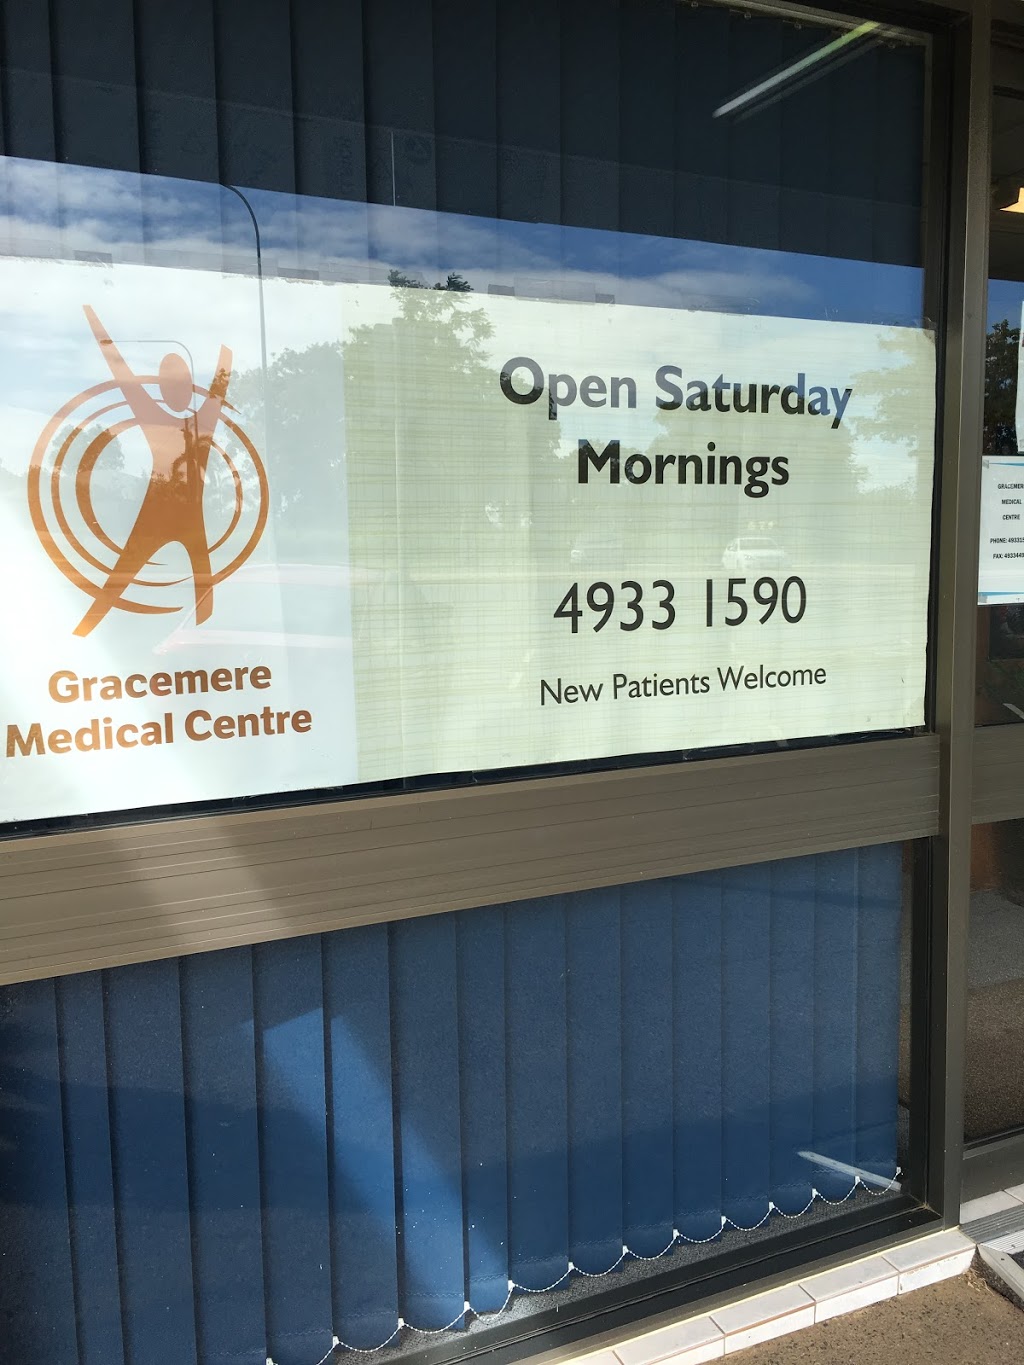 Gracemere Medical Centre | health | 17 Lawrie St, Gracemere QLD 4702, Australia | 0749331590 OR +61 7 4933 1590